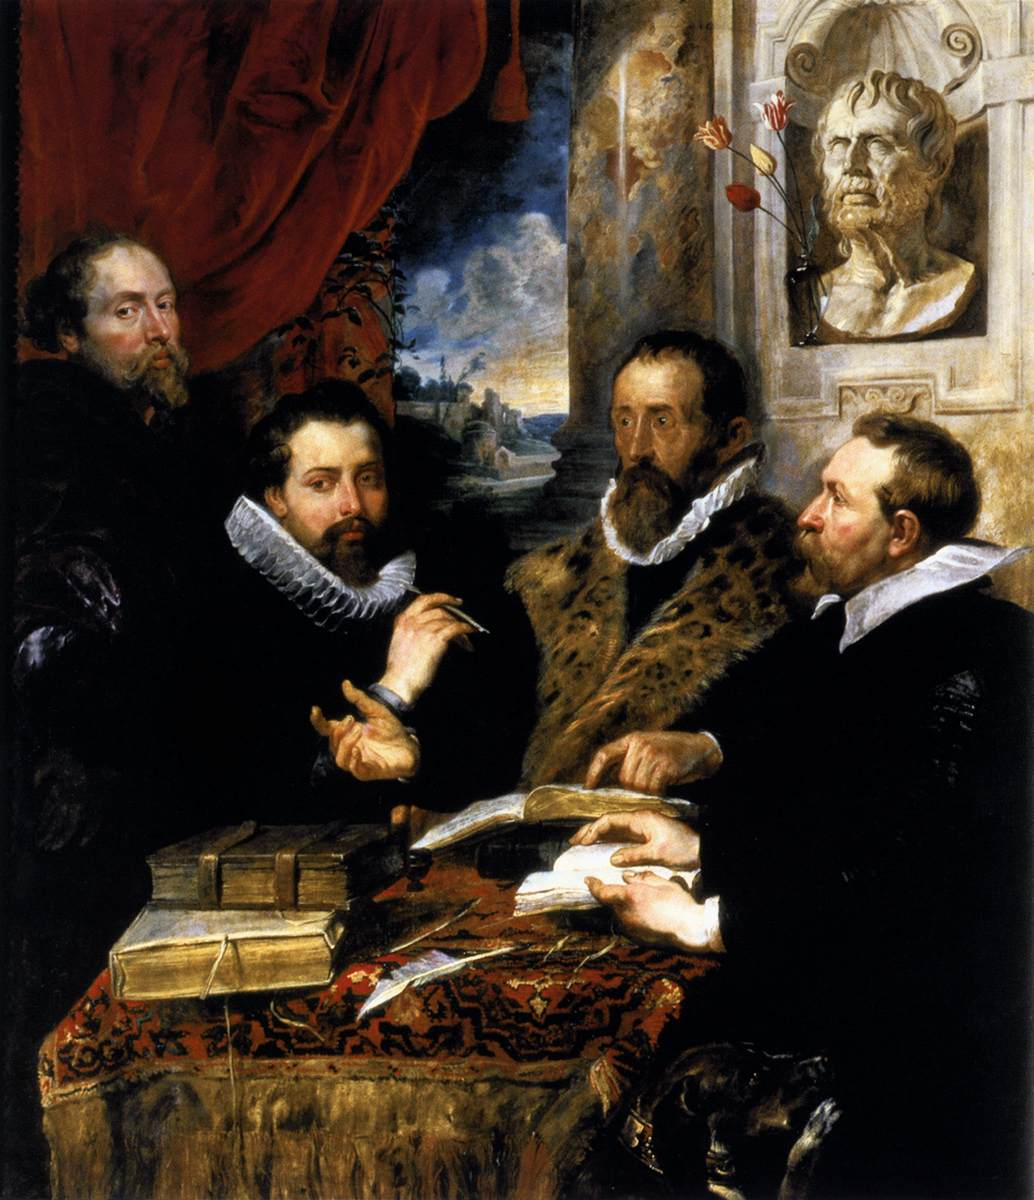 Peter+Paul+Rubens-1577-1640 (104).jpg